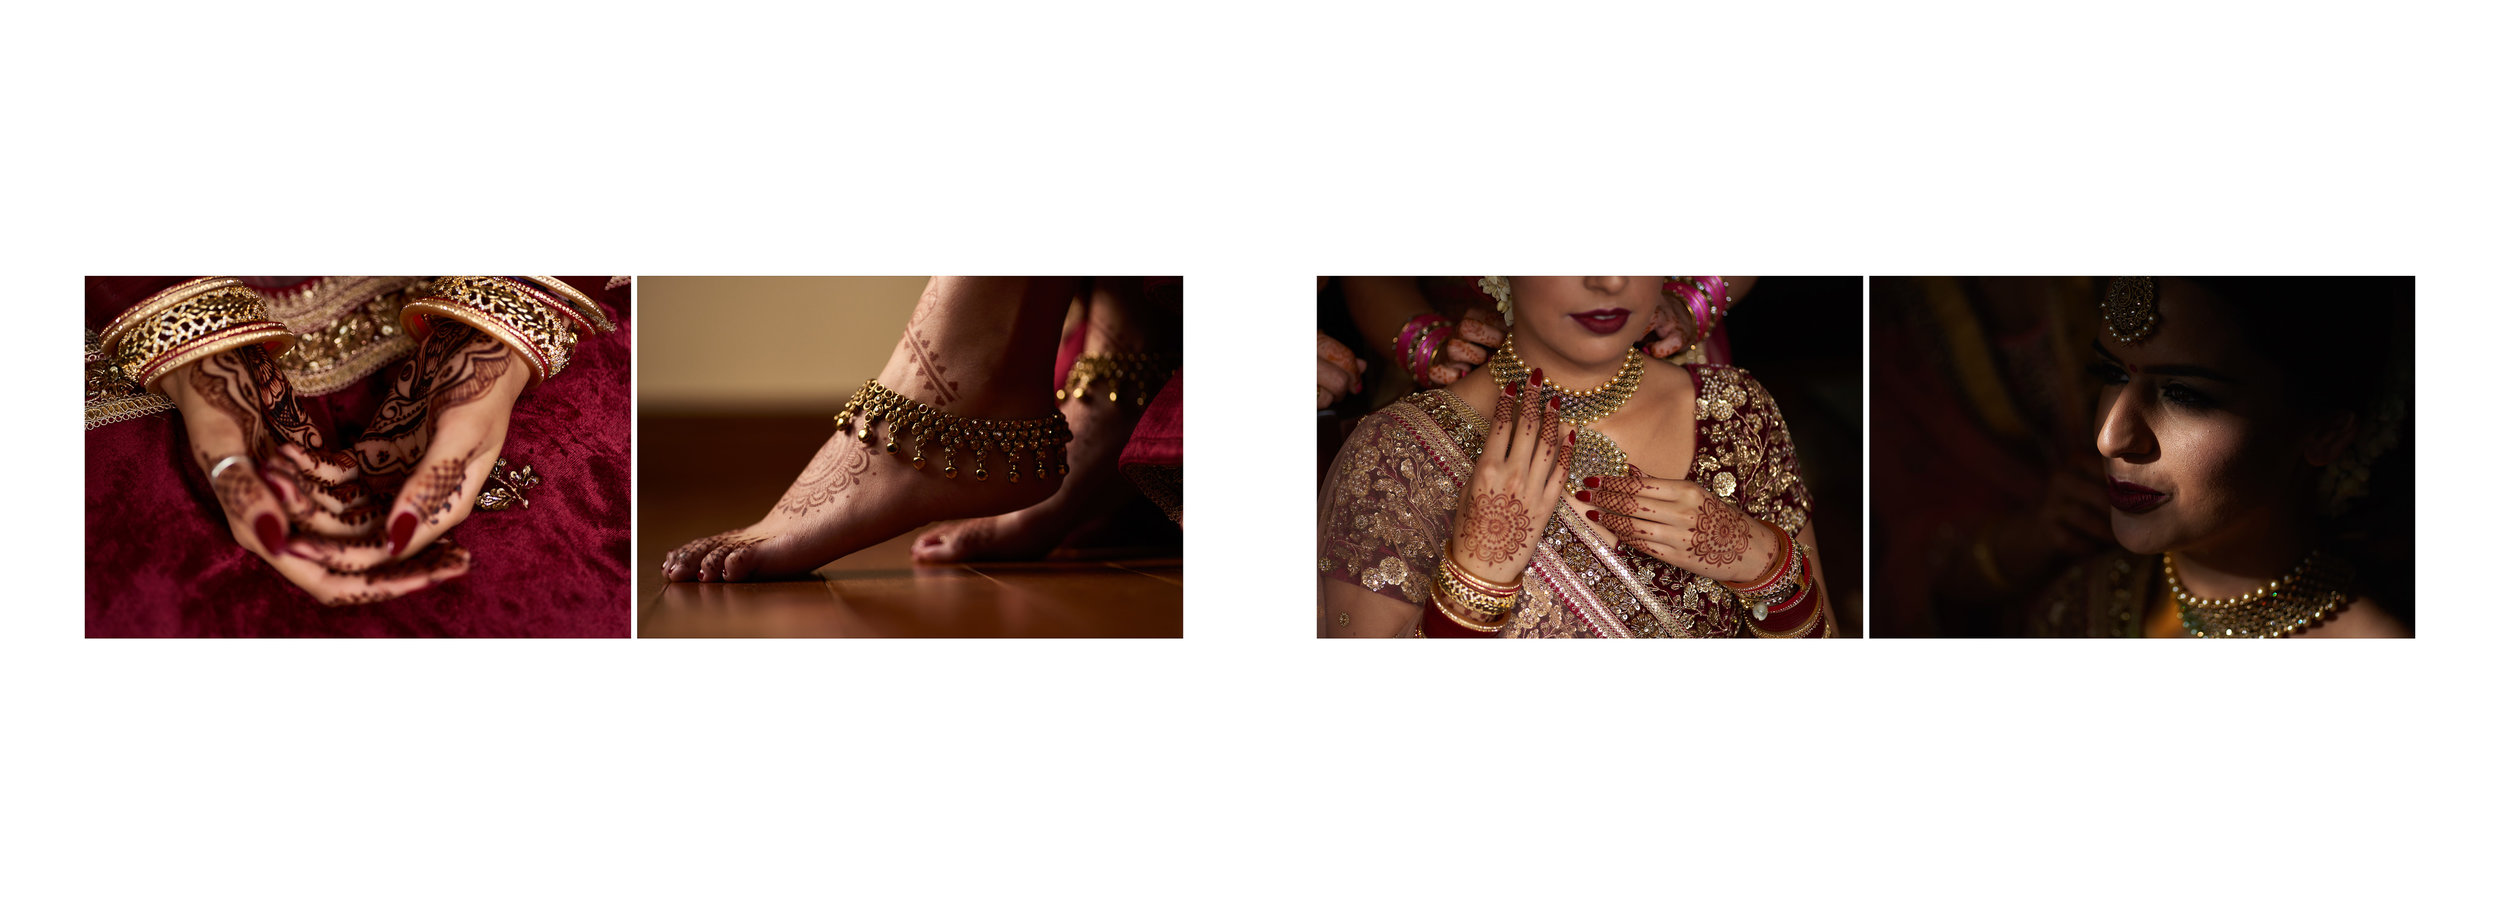 Sikh Wedding Album spread 6 - bride outfit closeups